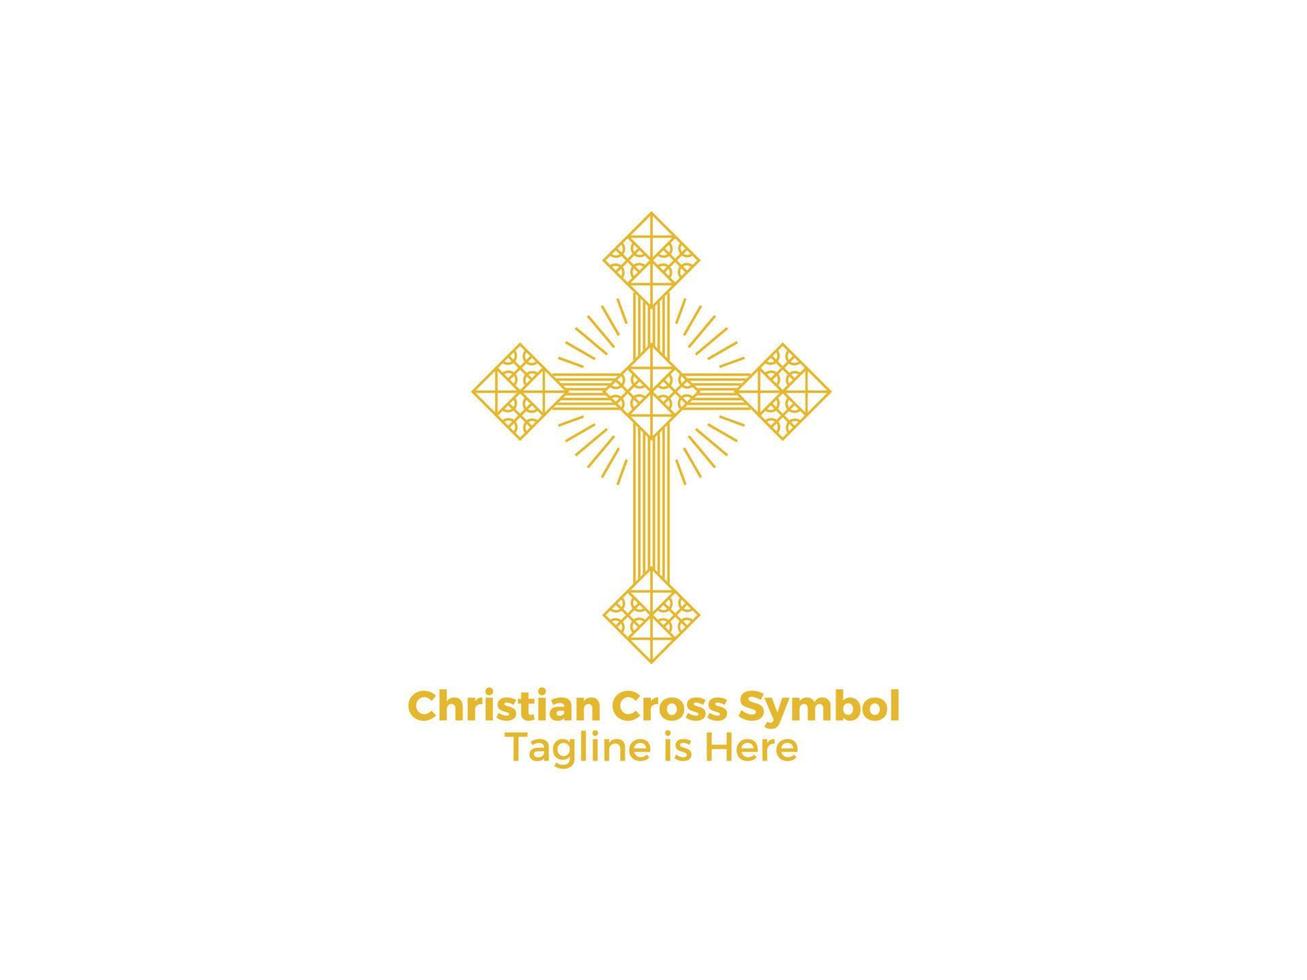 kruis symbolen christenen katholicisme religie vrede jezus gratis vector